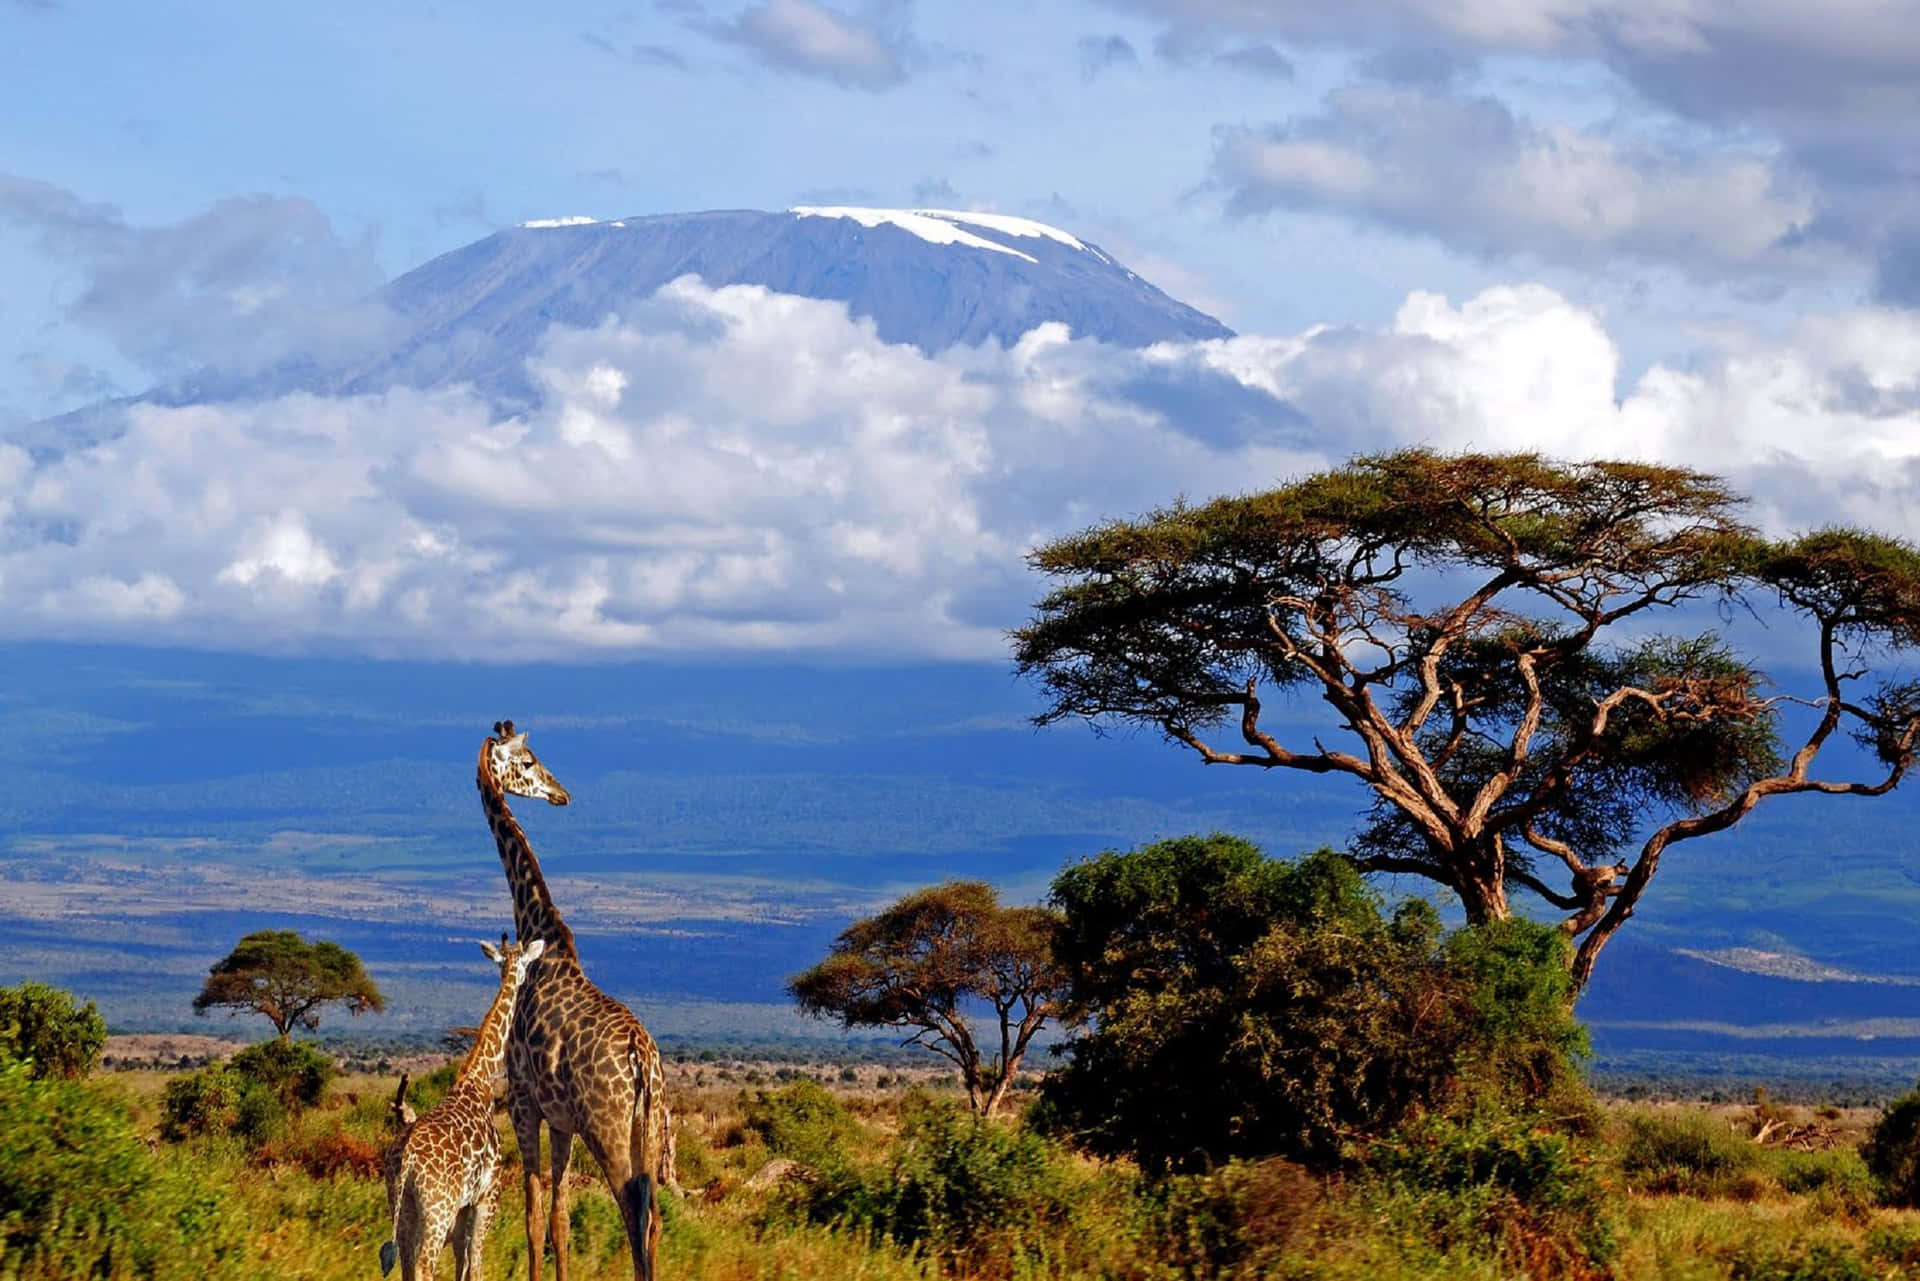 Giraffeam Mount Kilimanjaro Wallpaper